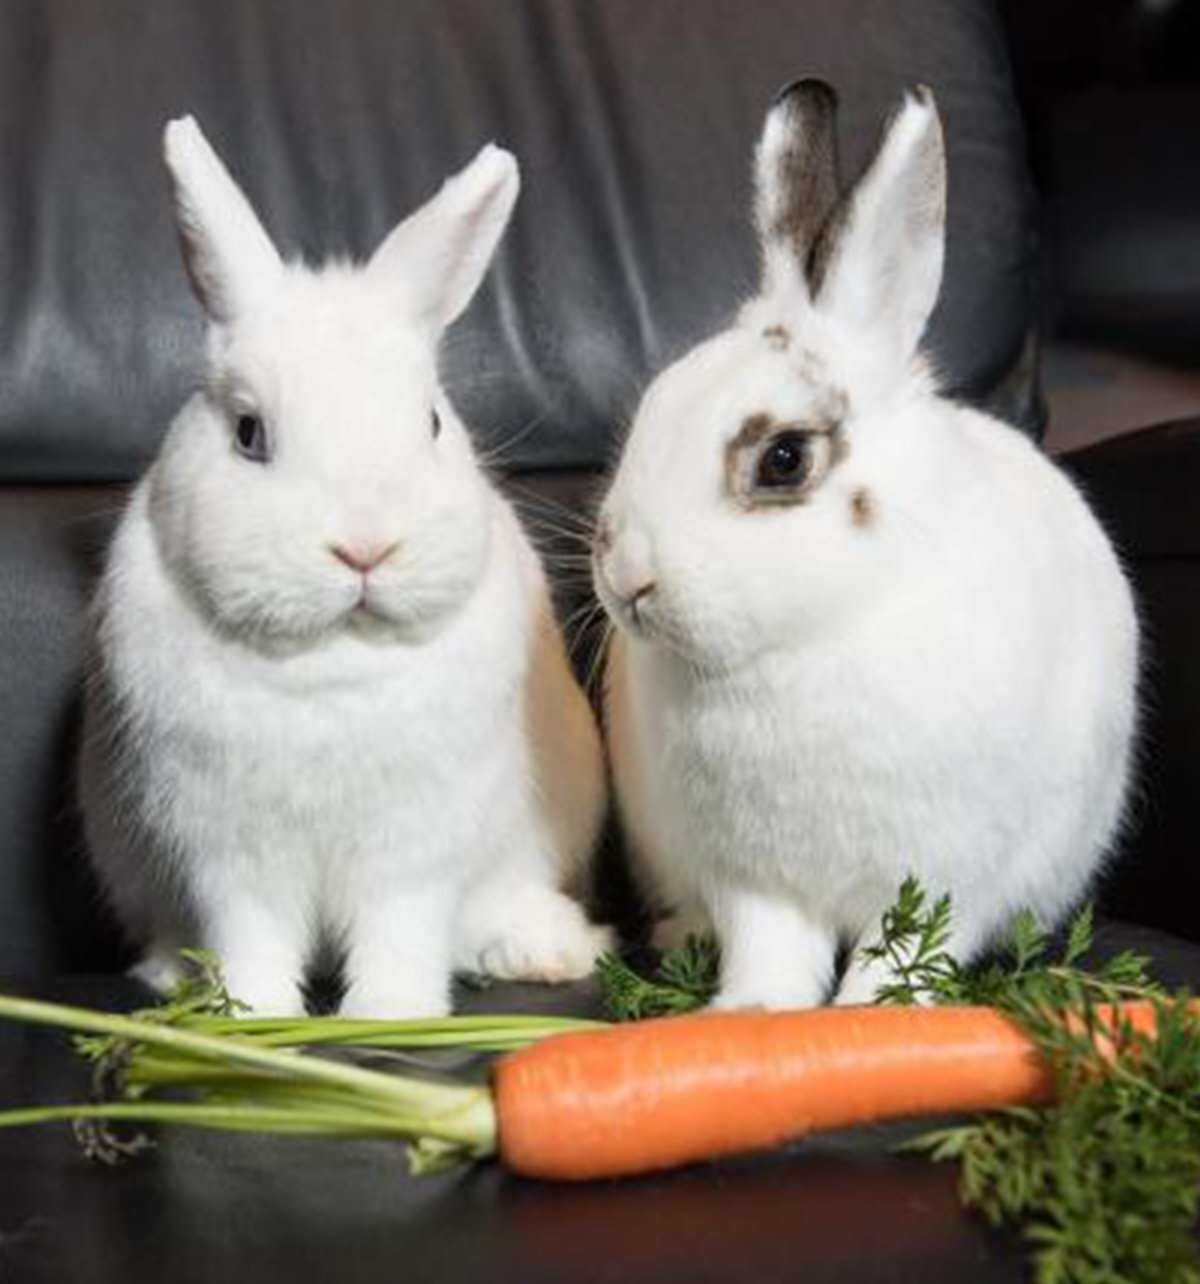 Should You Buy A Rabbit?